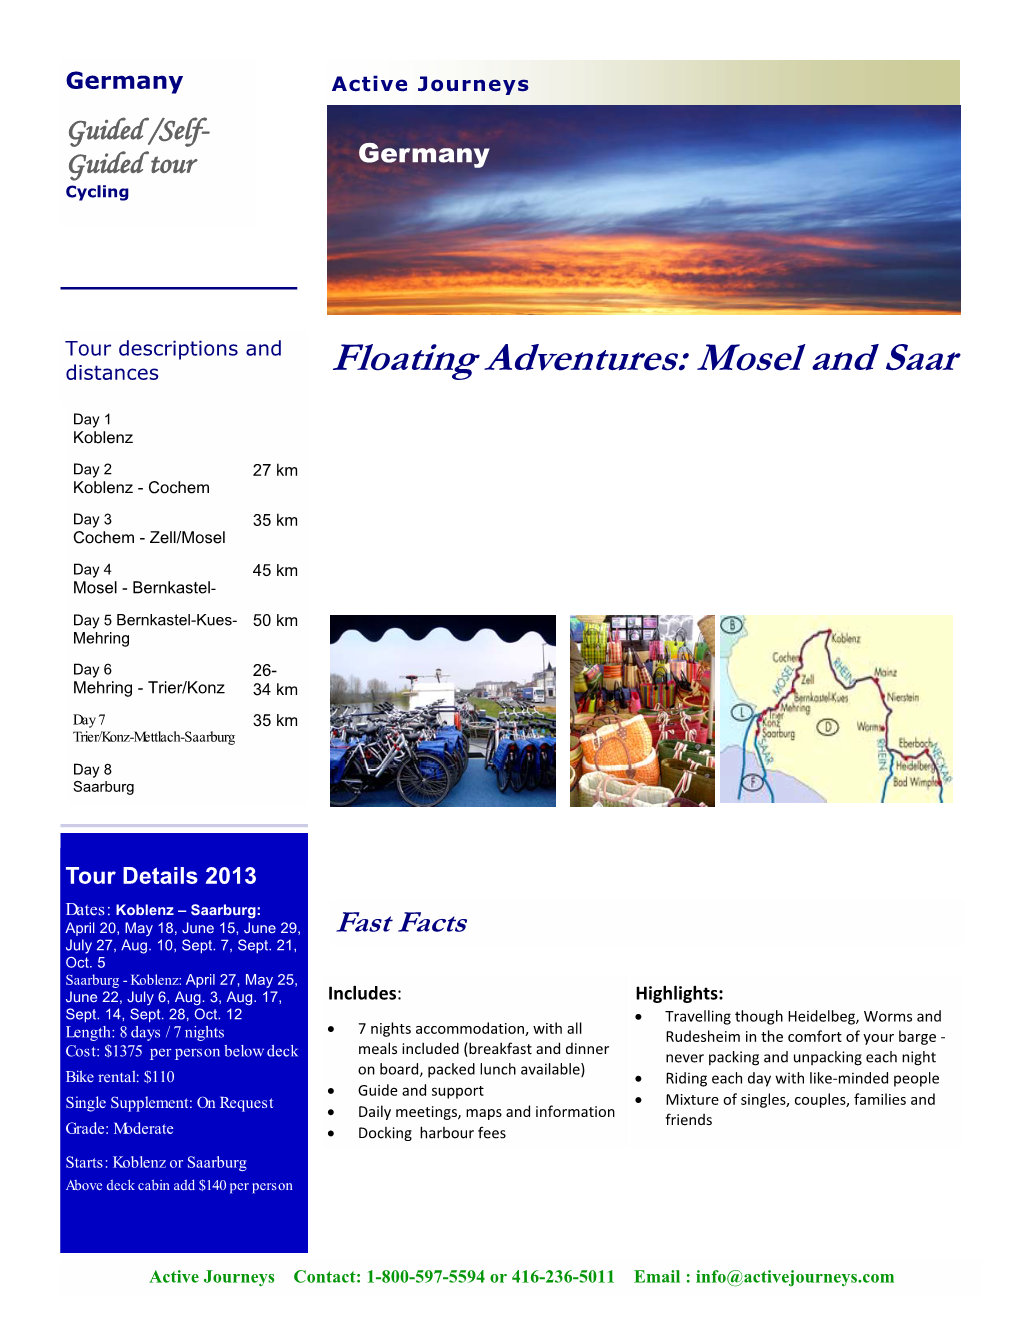 Floating Adventure GE Mosel and Saar.Pub